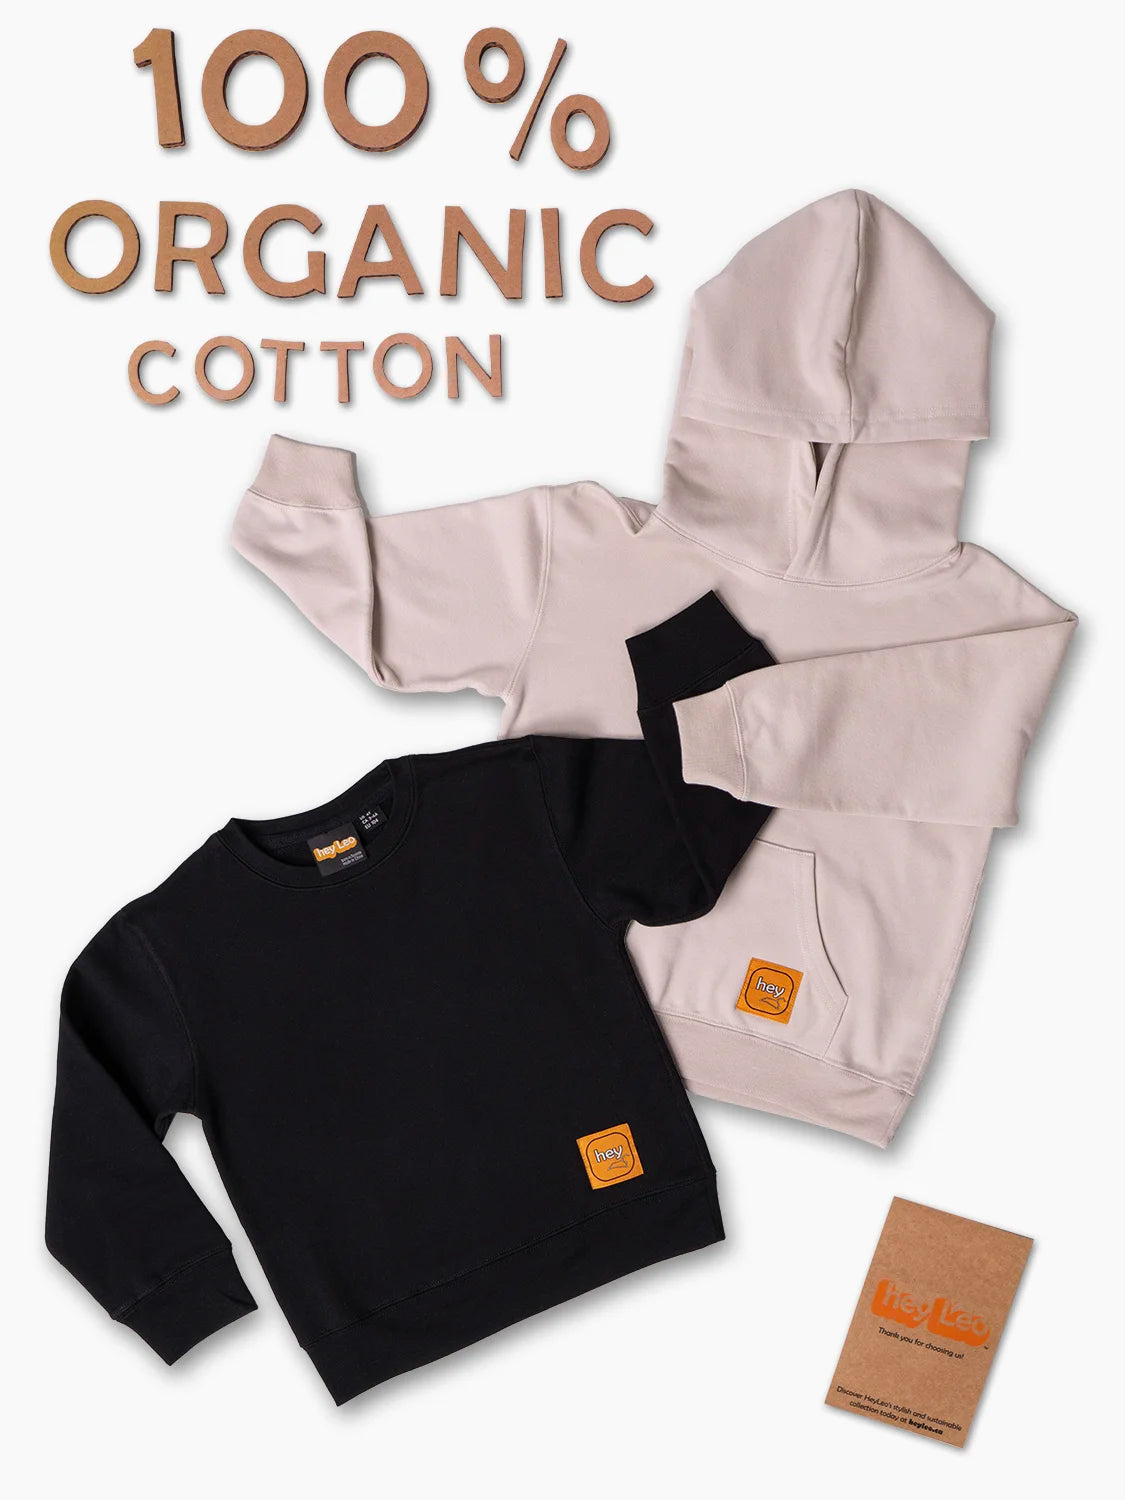 100% Organic Cotton 2-piece Outfit Set Light Gray/Black